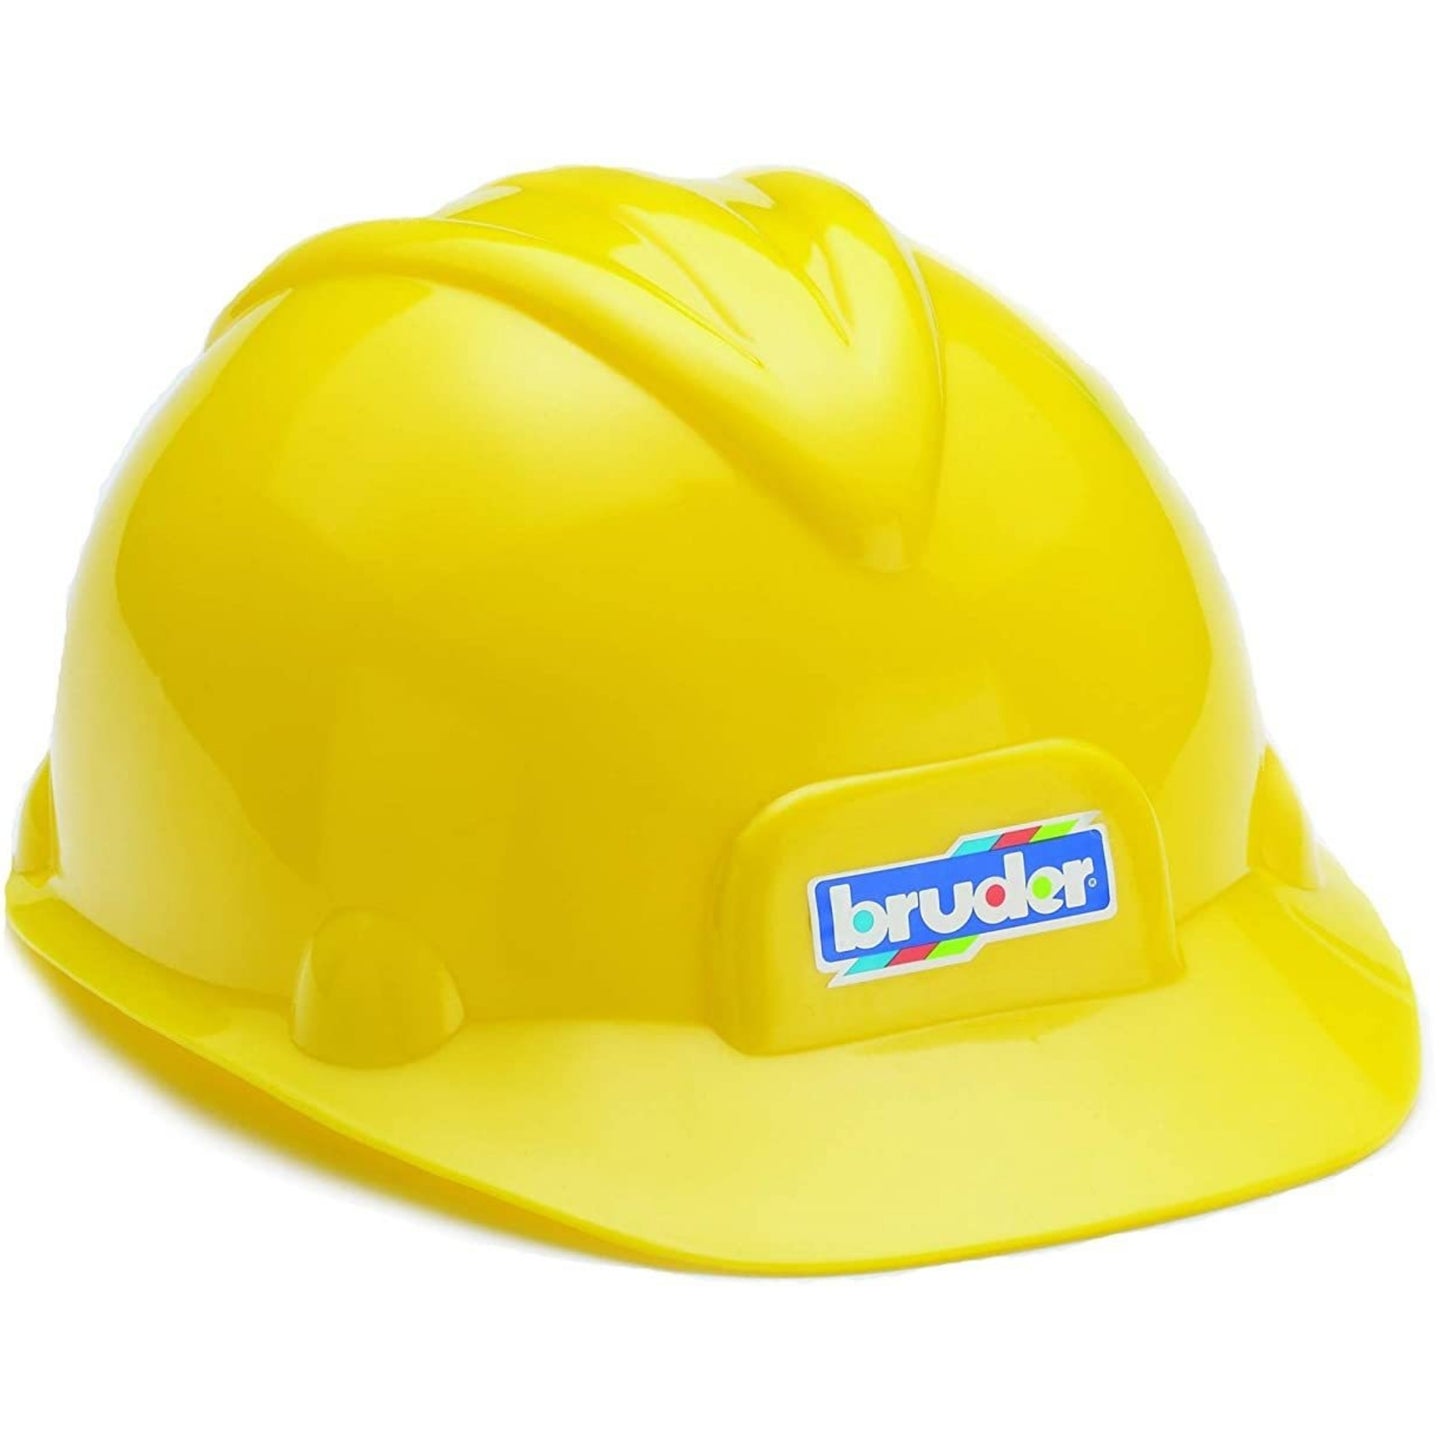 Construction Kid-Sized Hard Hat